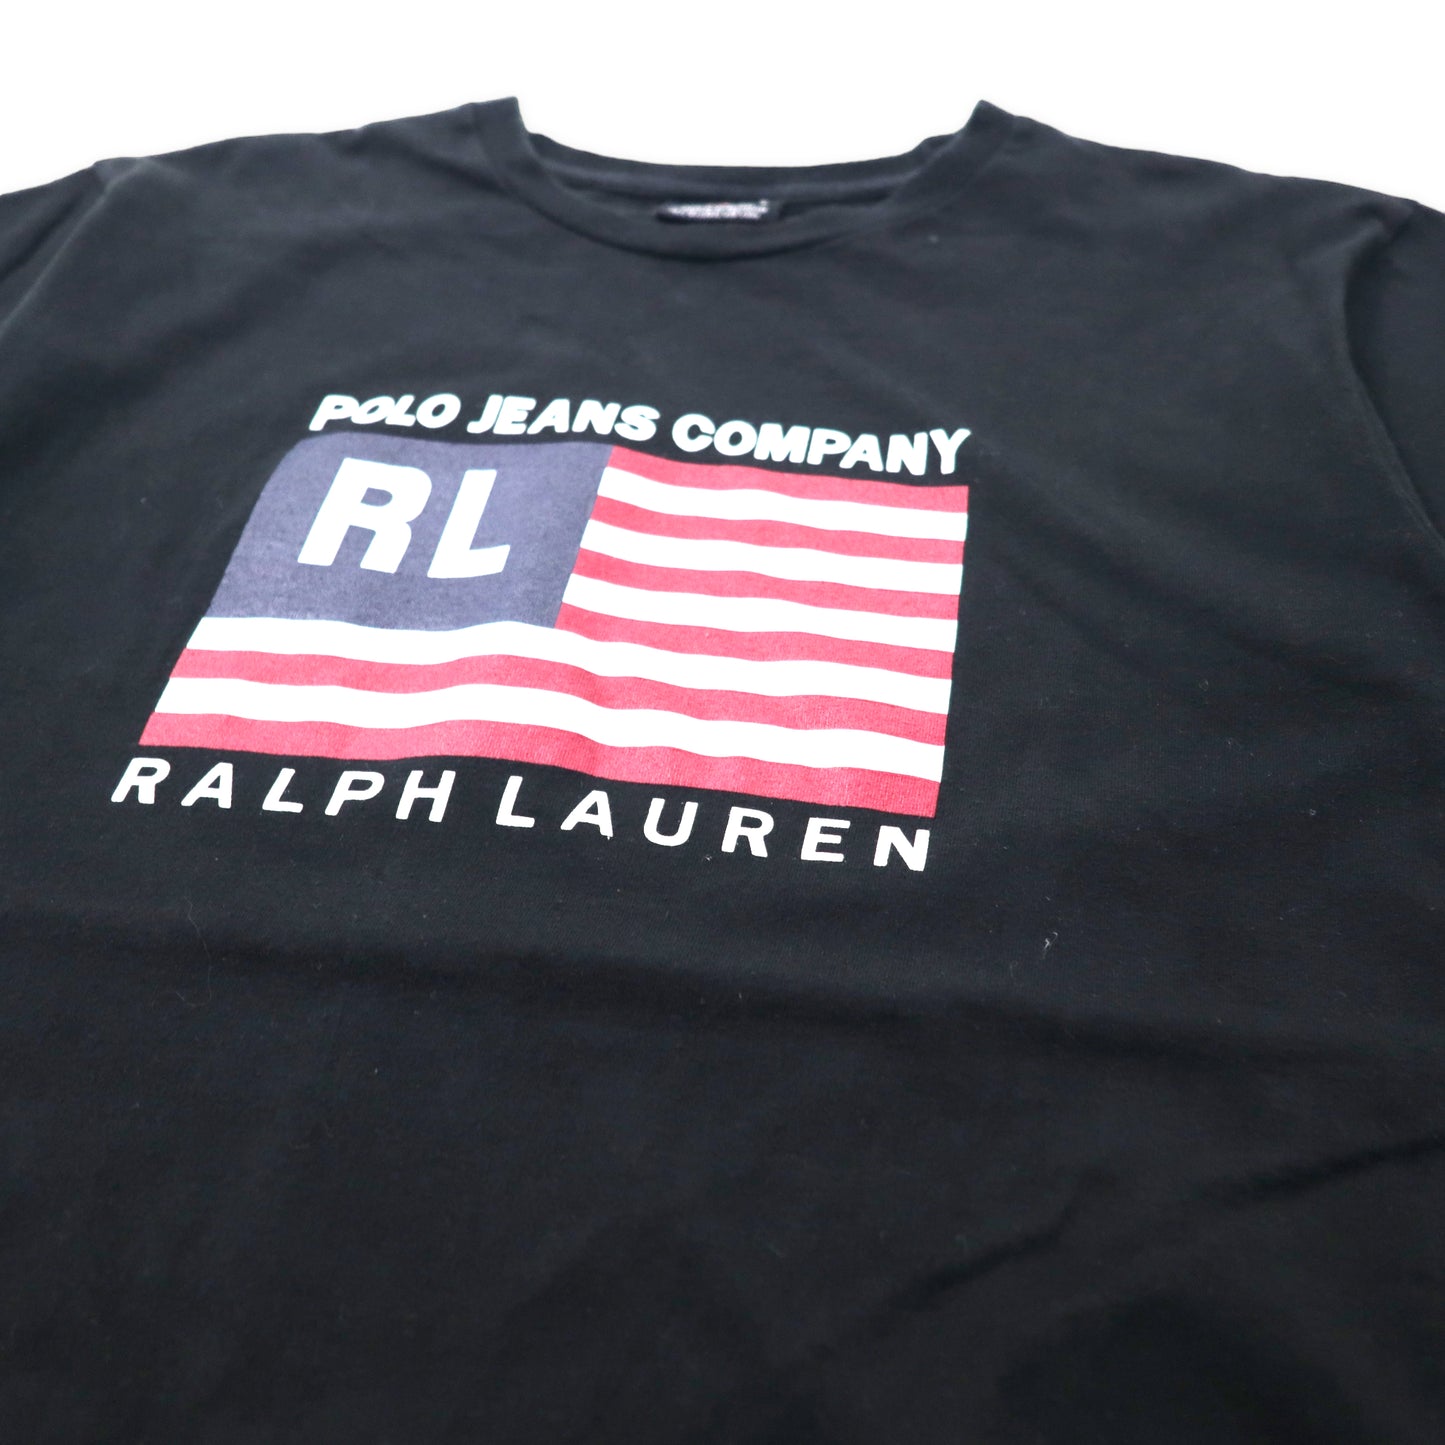 POLO JEANS CO. RALPH LAUREN 90年代 ロゴプリントTシャツ S ブラック 星条旗 コットン